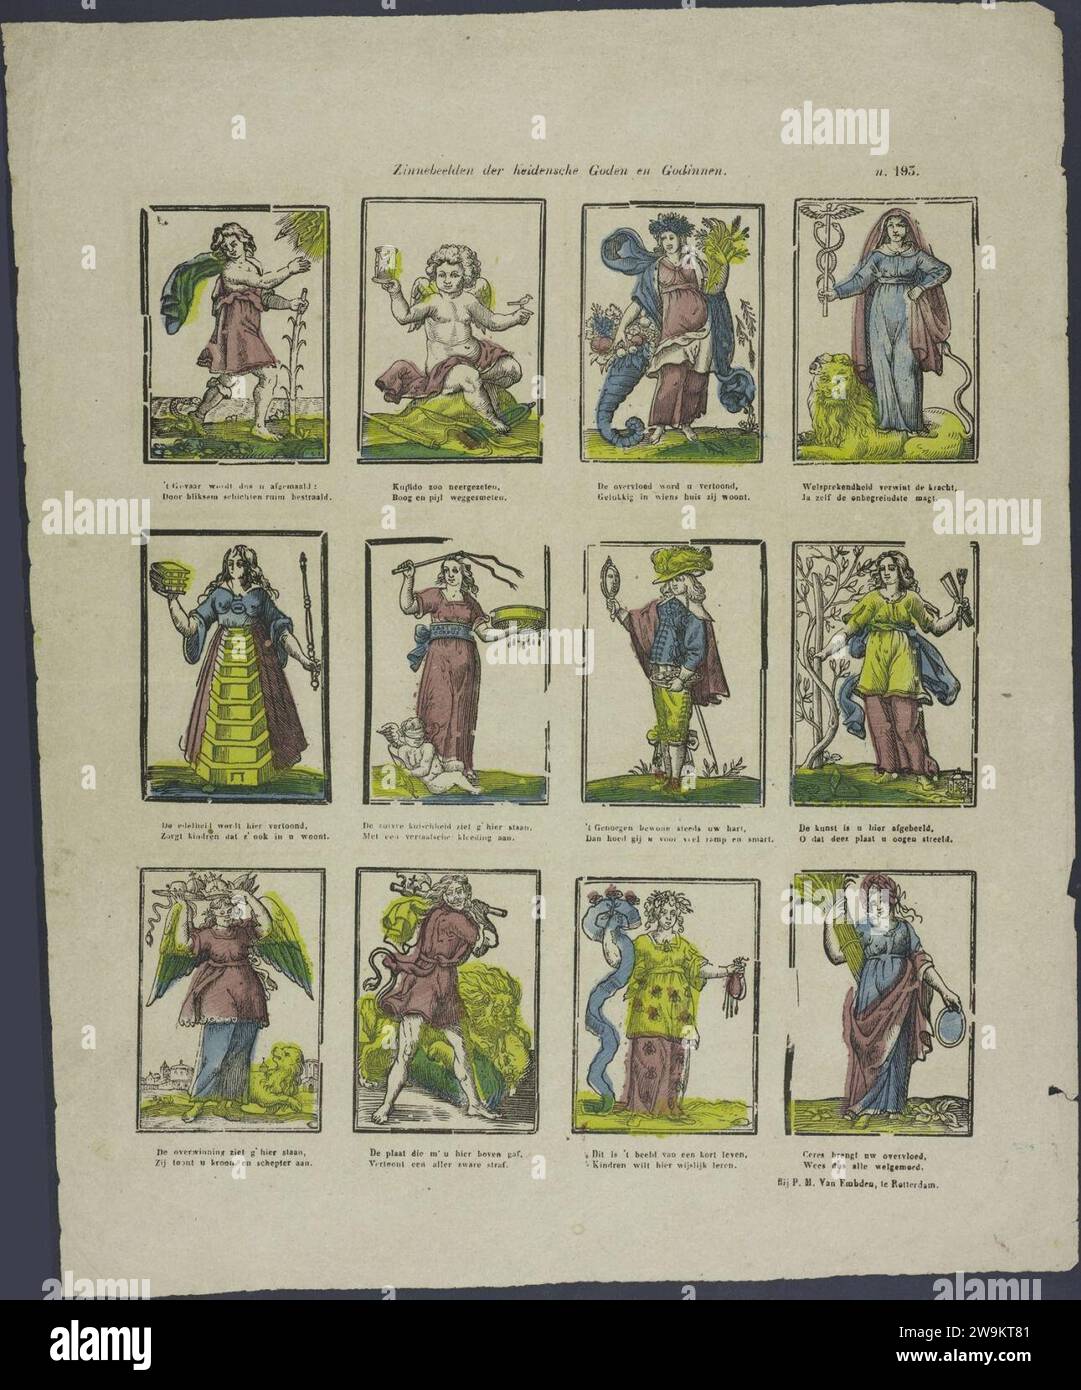 Zinnebeelden der heidensche goden & godinnen-Catchpenny print-Borms 0654. Stock Photo